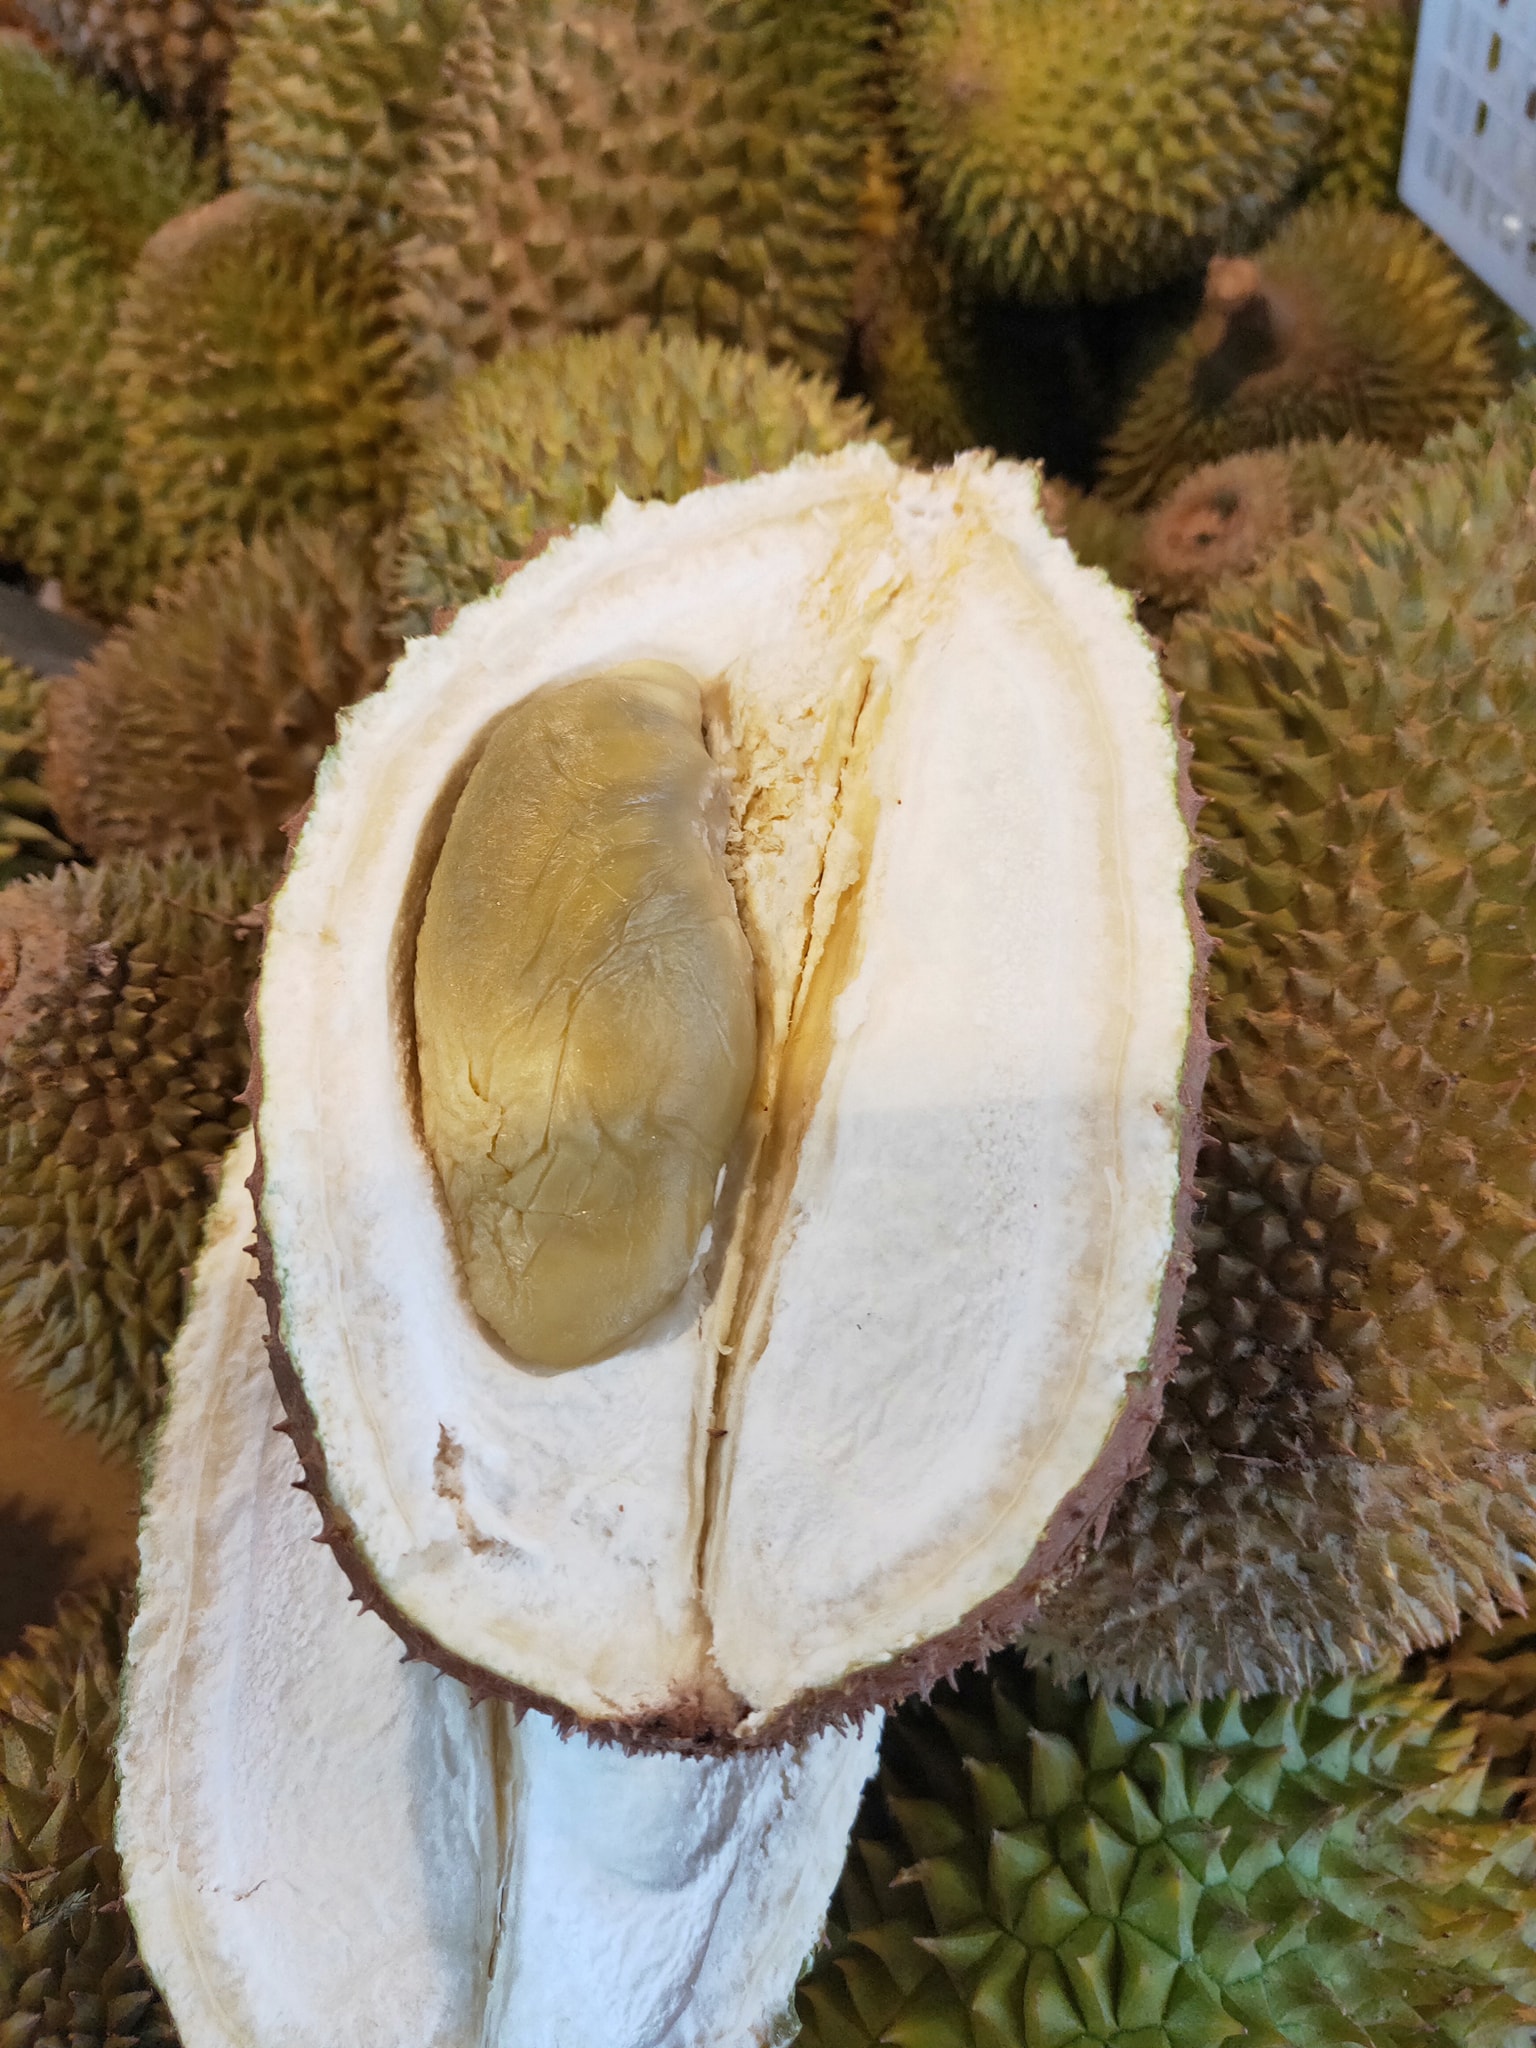 Durian flesh